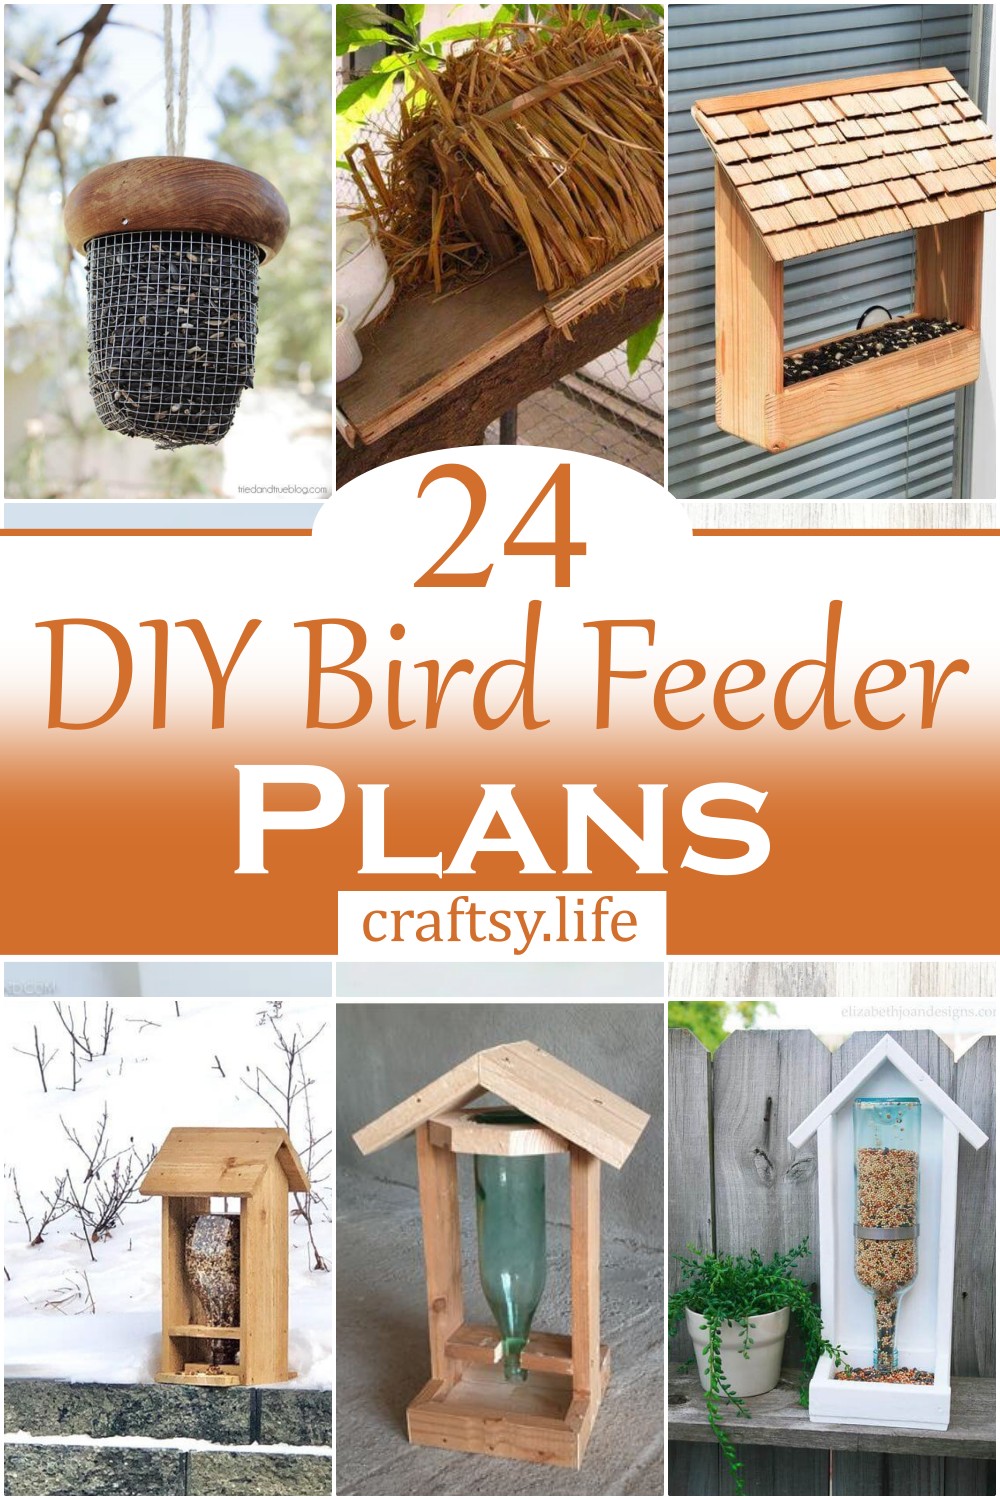 DIY Bird Feeder Plans